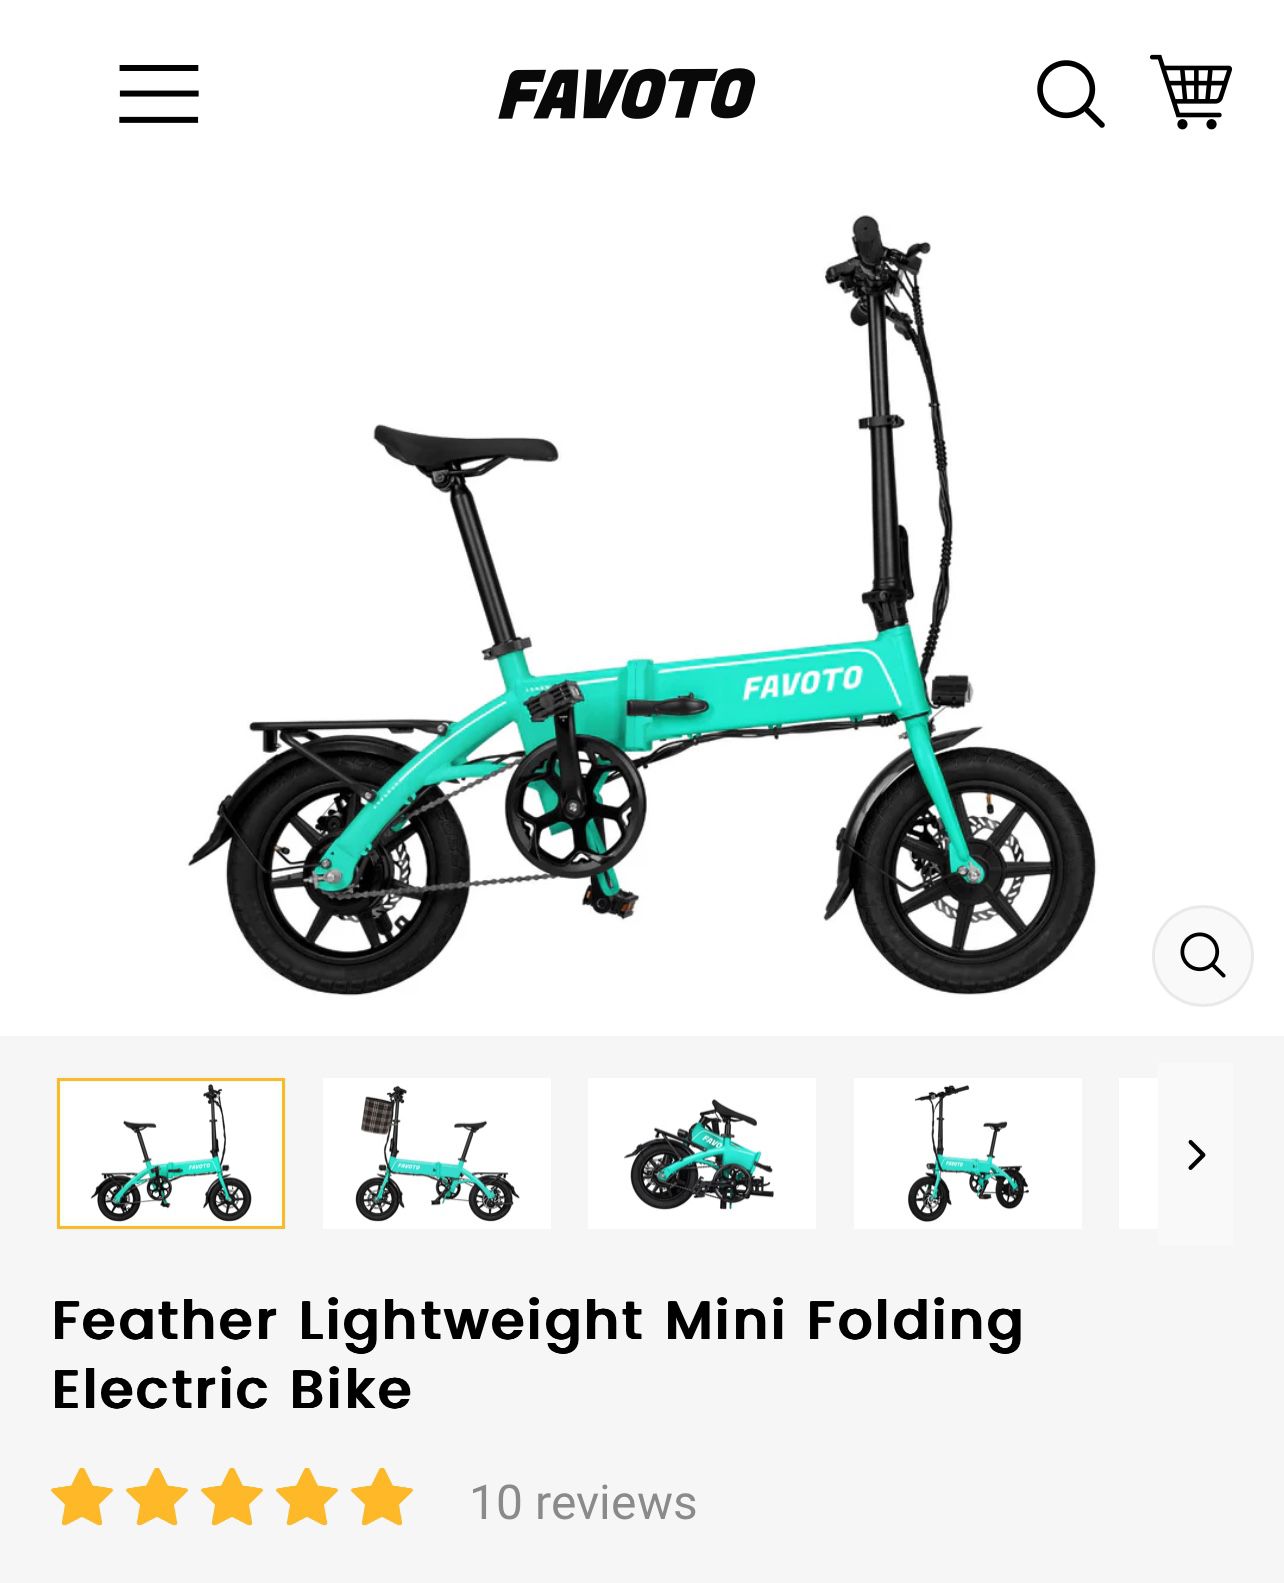 Feather Lightweight Mini Folding Electric Bike